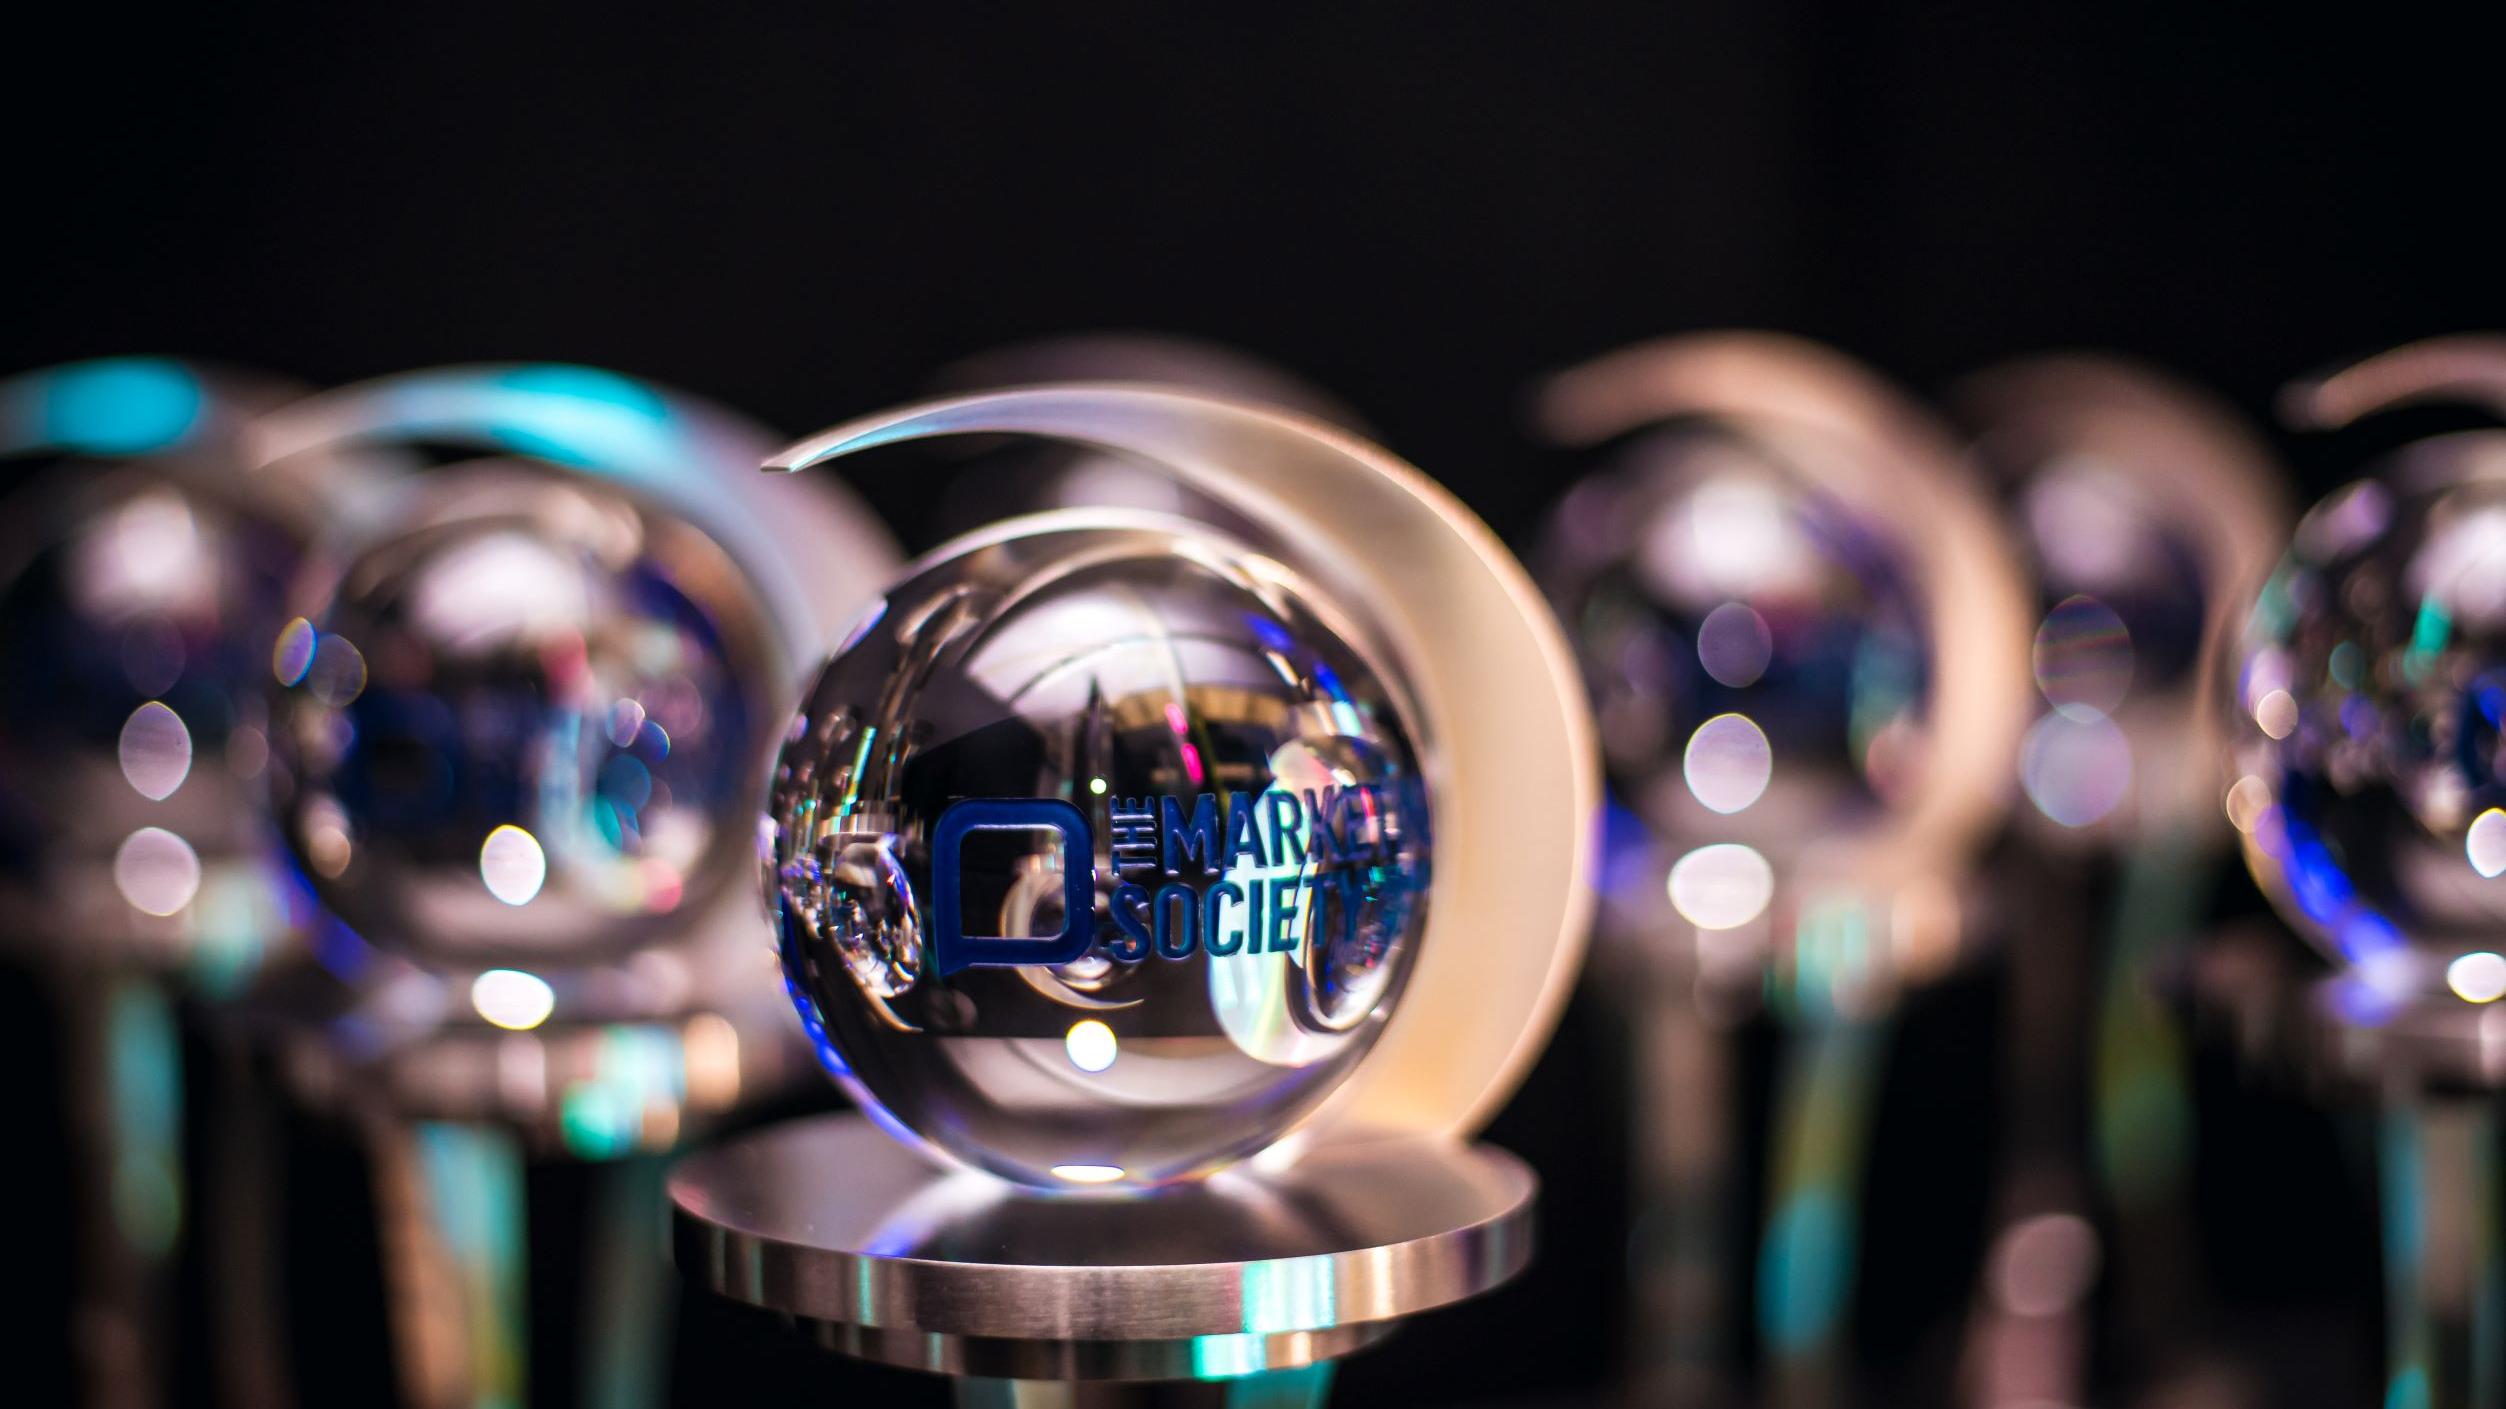 The Marketing Society Awards Trophies